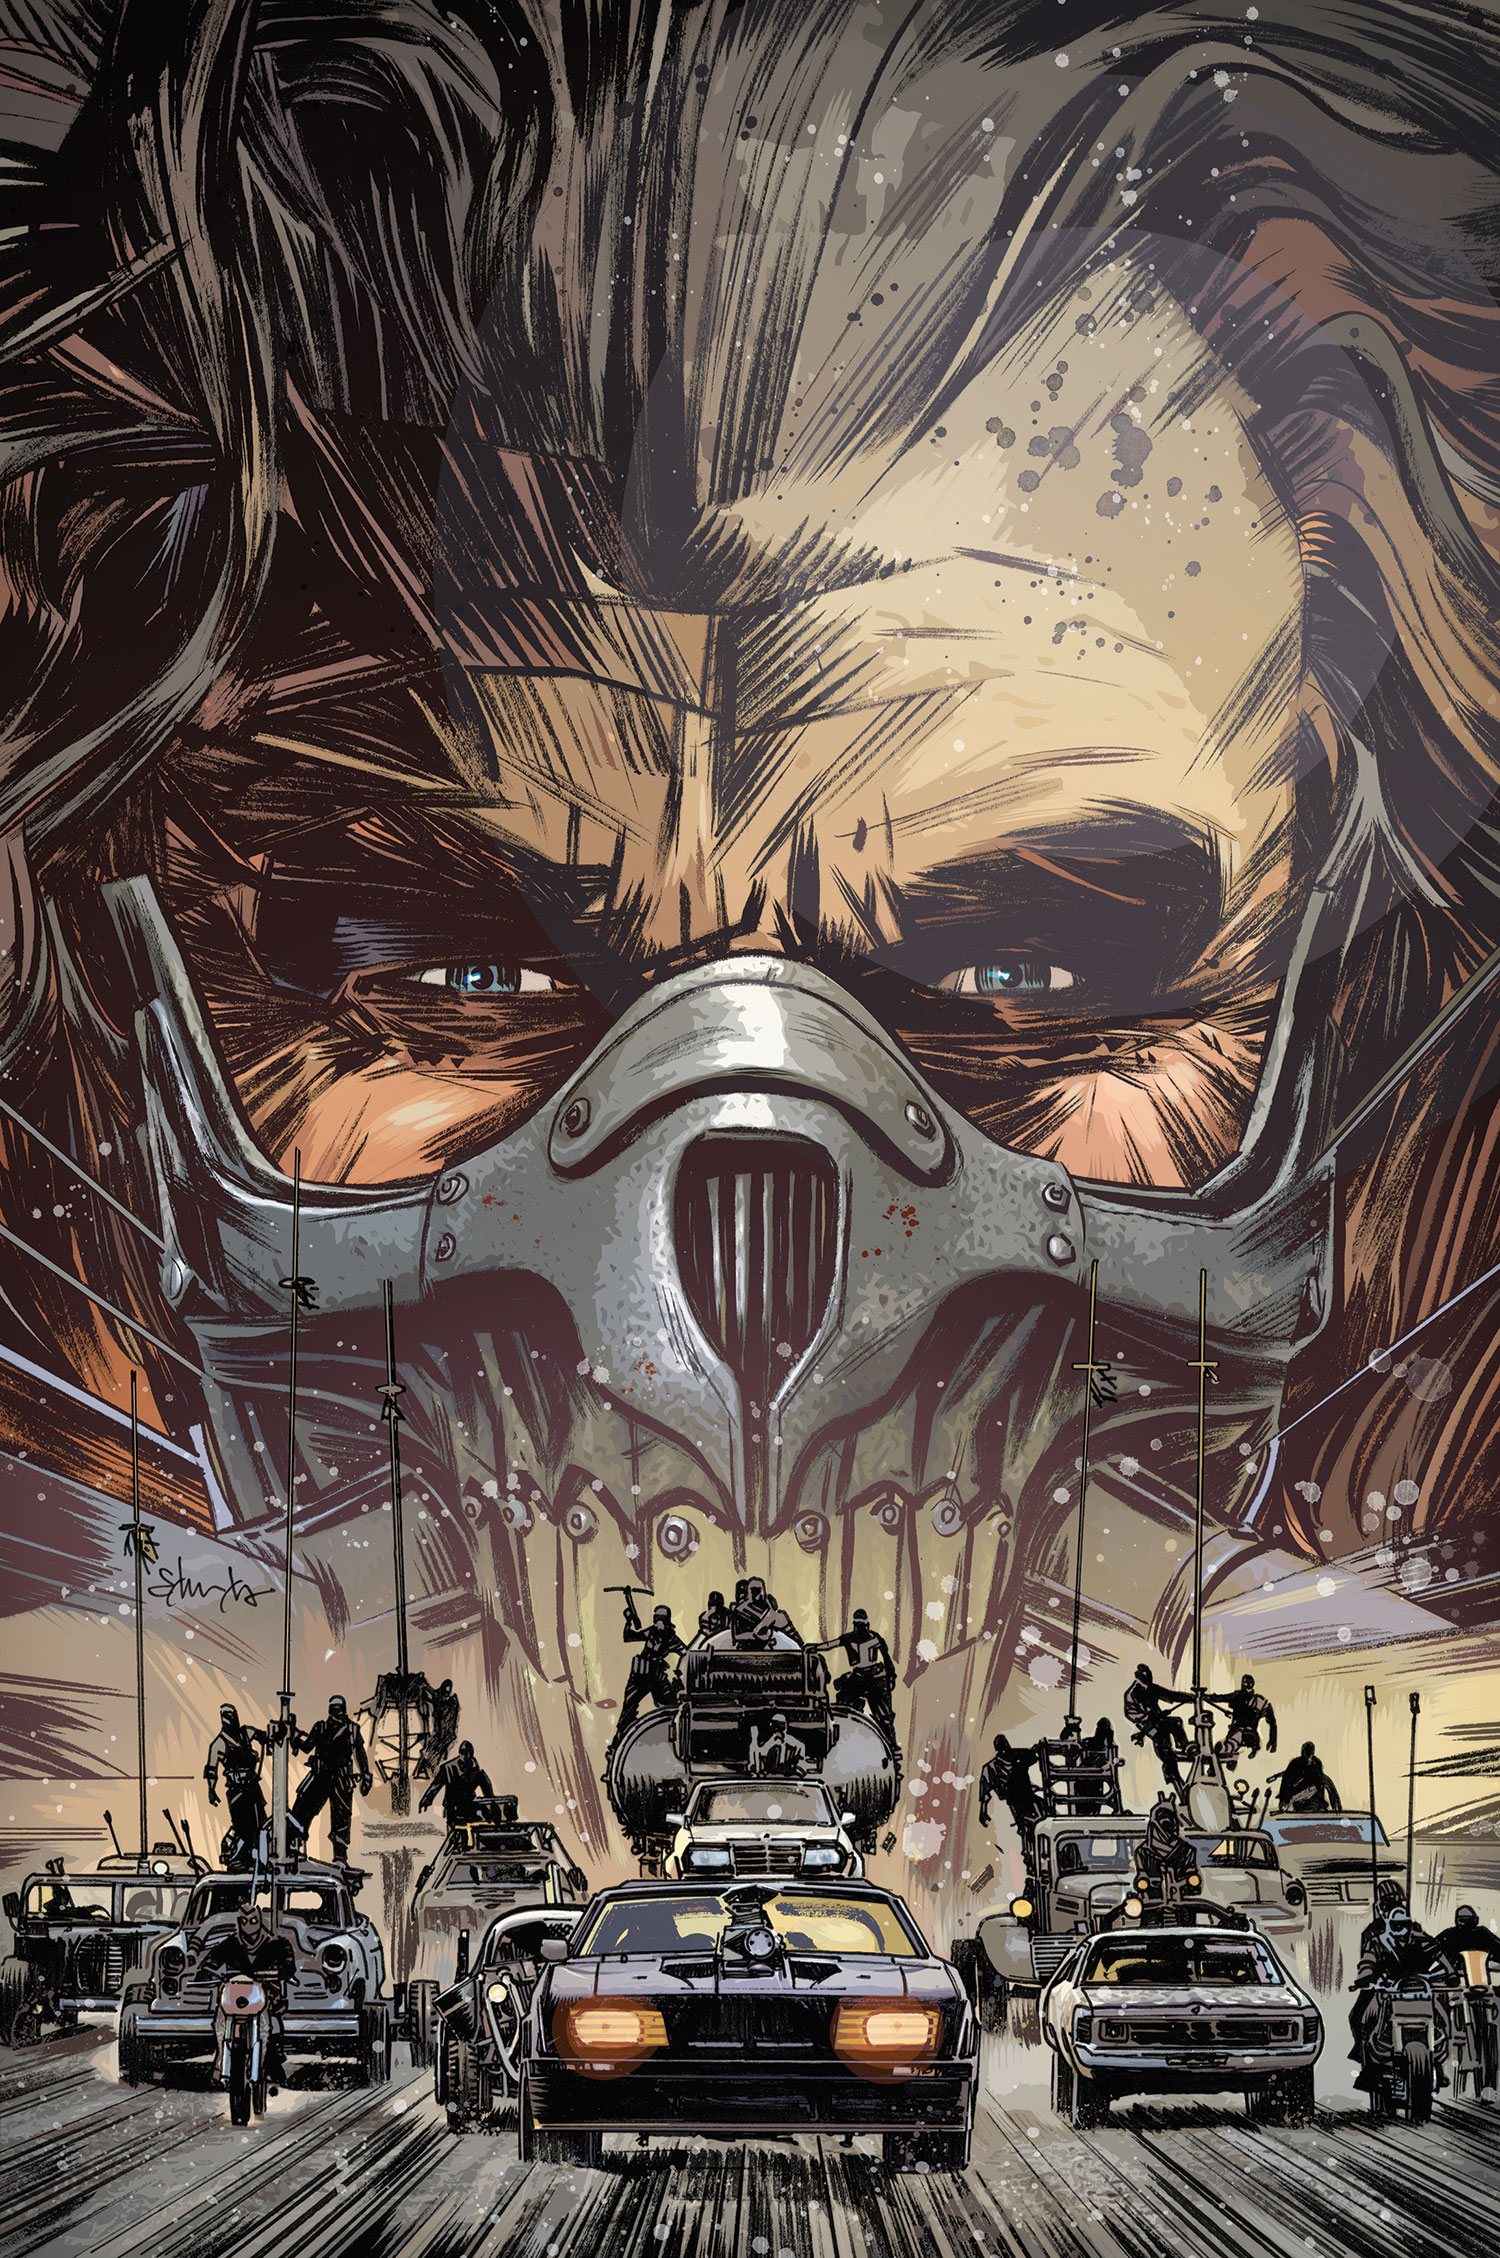 Mad Max: Fury Road: Nux & Immortan Joe Vol. 1 #1